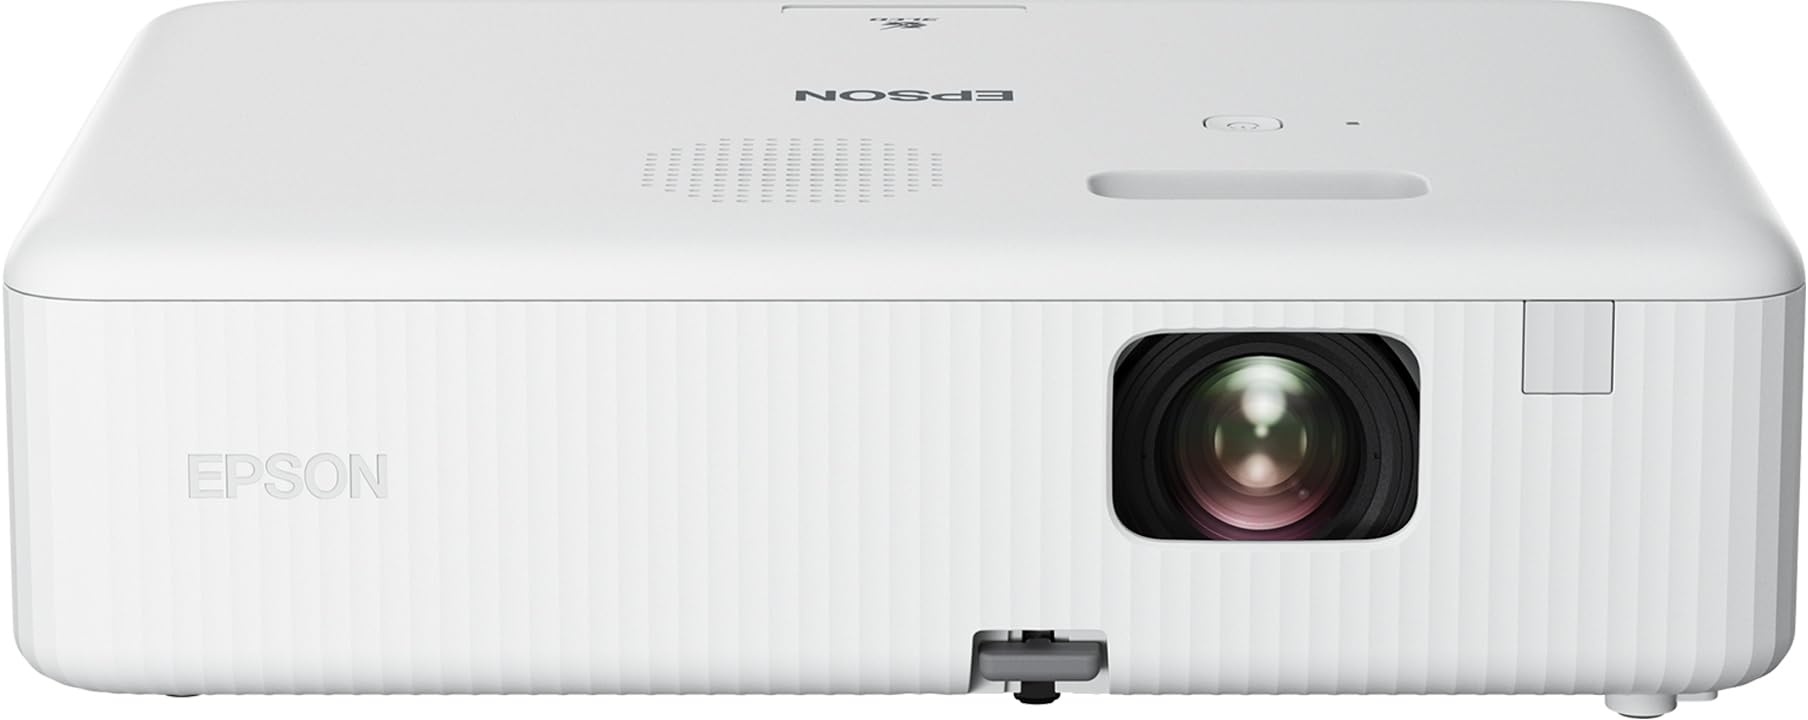 Epson CO-FH01 3LCD-Projektor (Full HD 1080p, 3.000 Lumen Weiß- und Farbhelligkeit, 391 Zoll/9,93 m Bilddiagonale, HDMI)